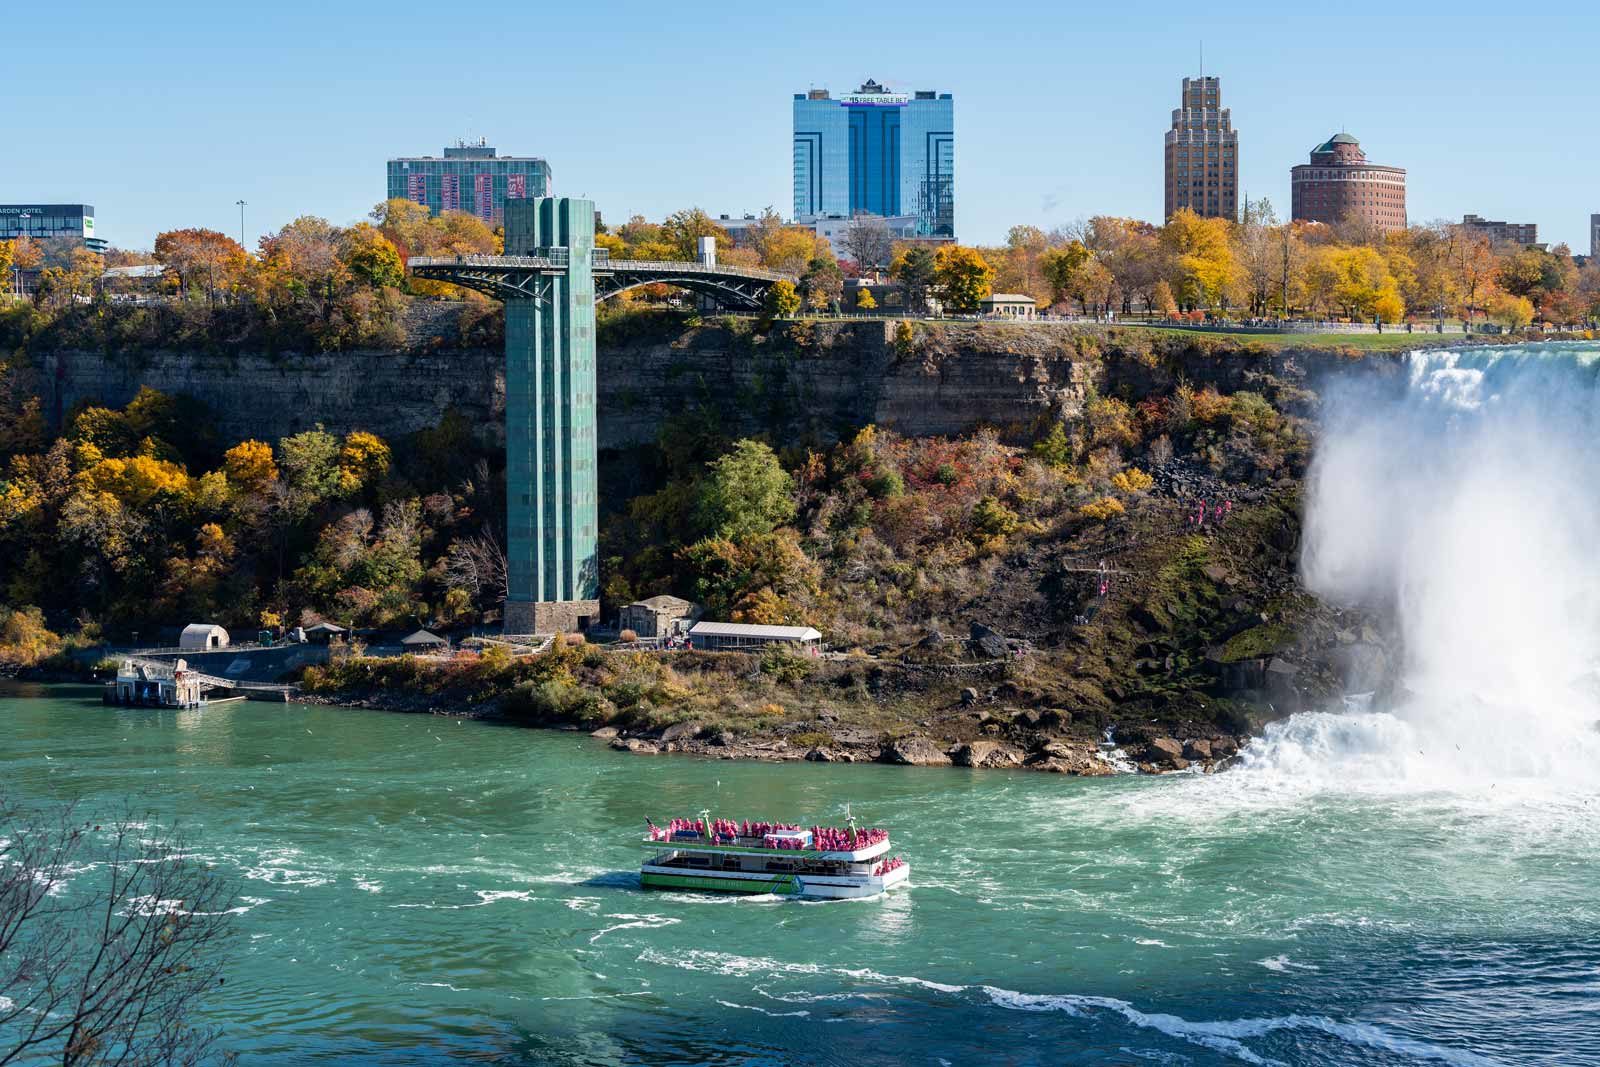 Niagara Falls USA Observation Tower